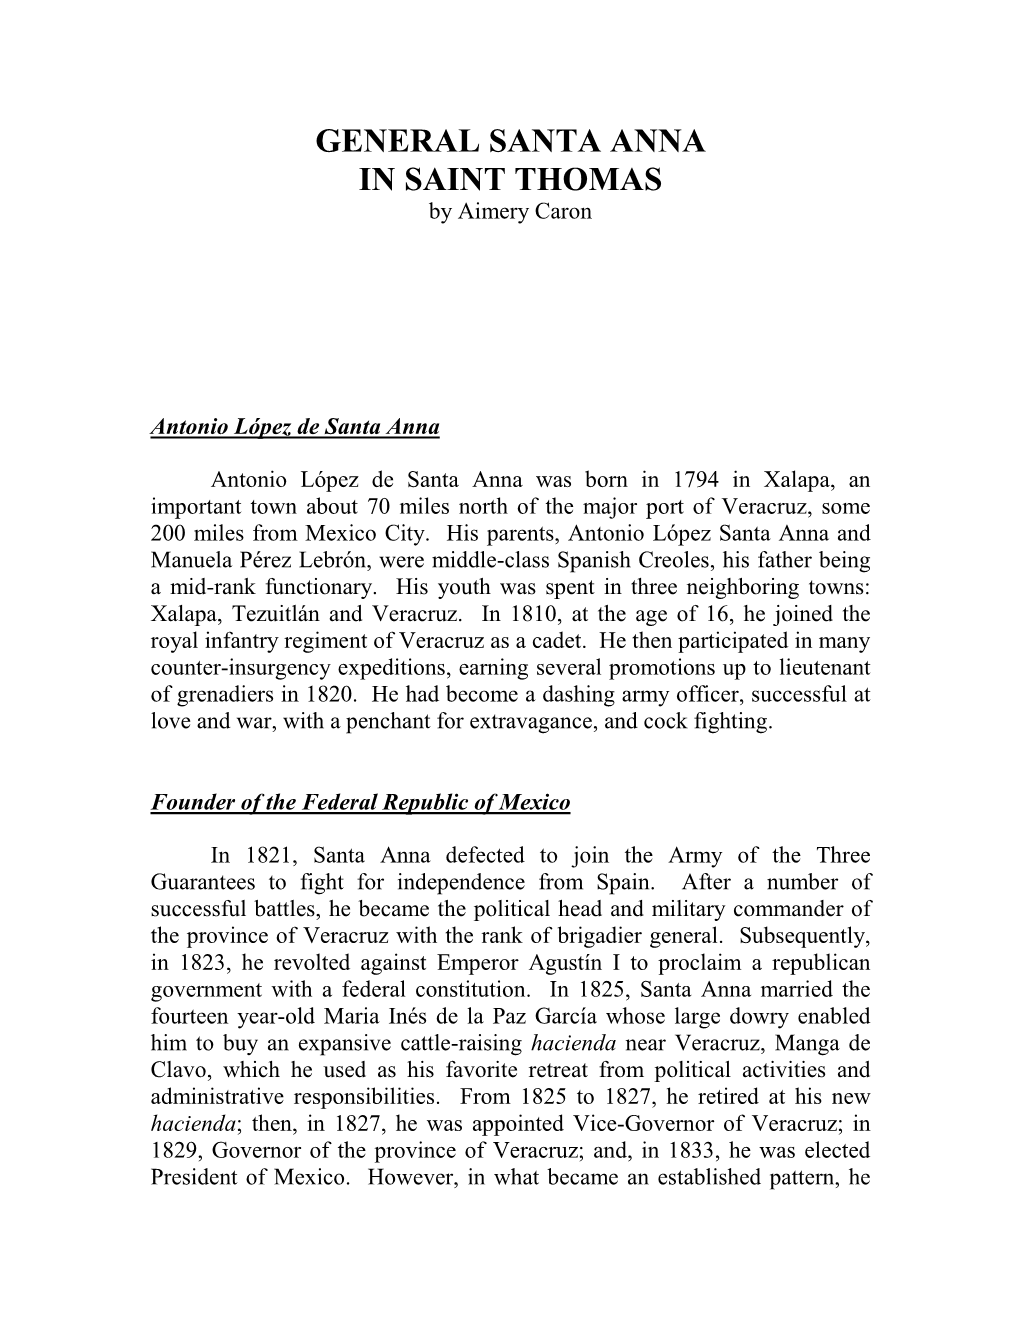 GENERAL SANTA ANNA in SAINT THOMAS by Aimery Caron